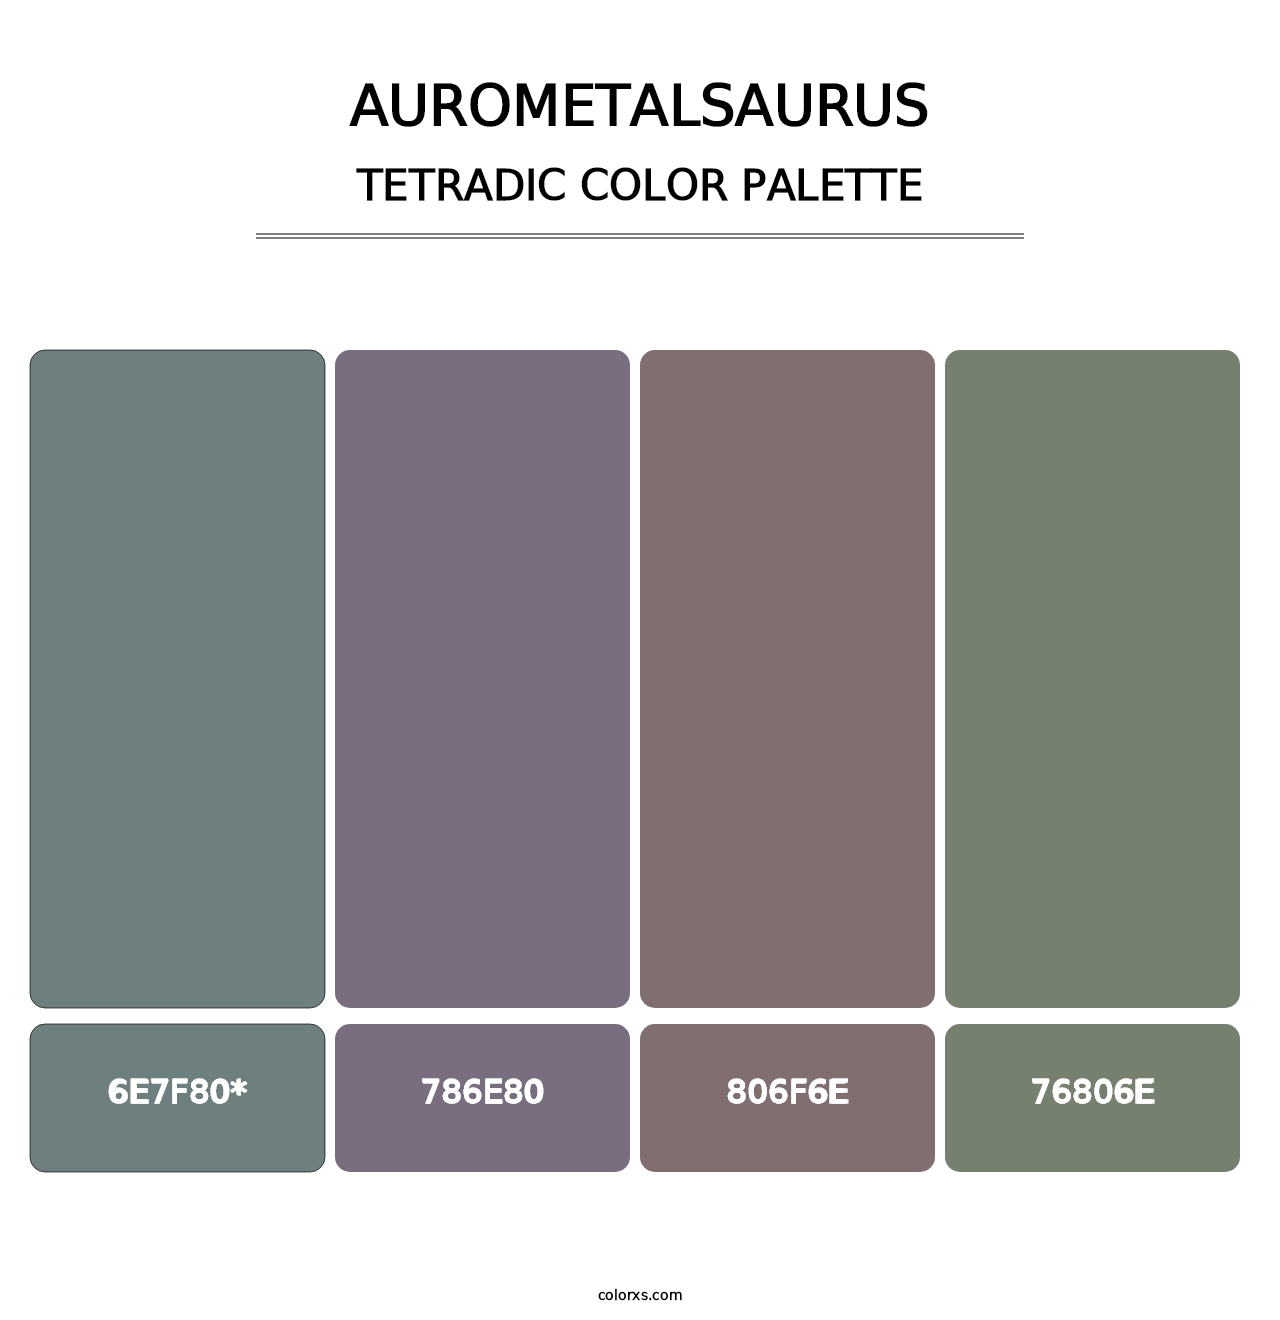 AuroMetalSaurus - Tetradic Color Palette